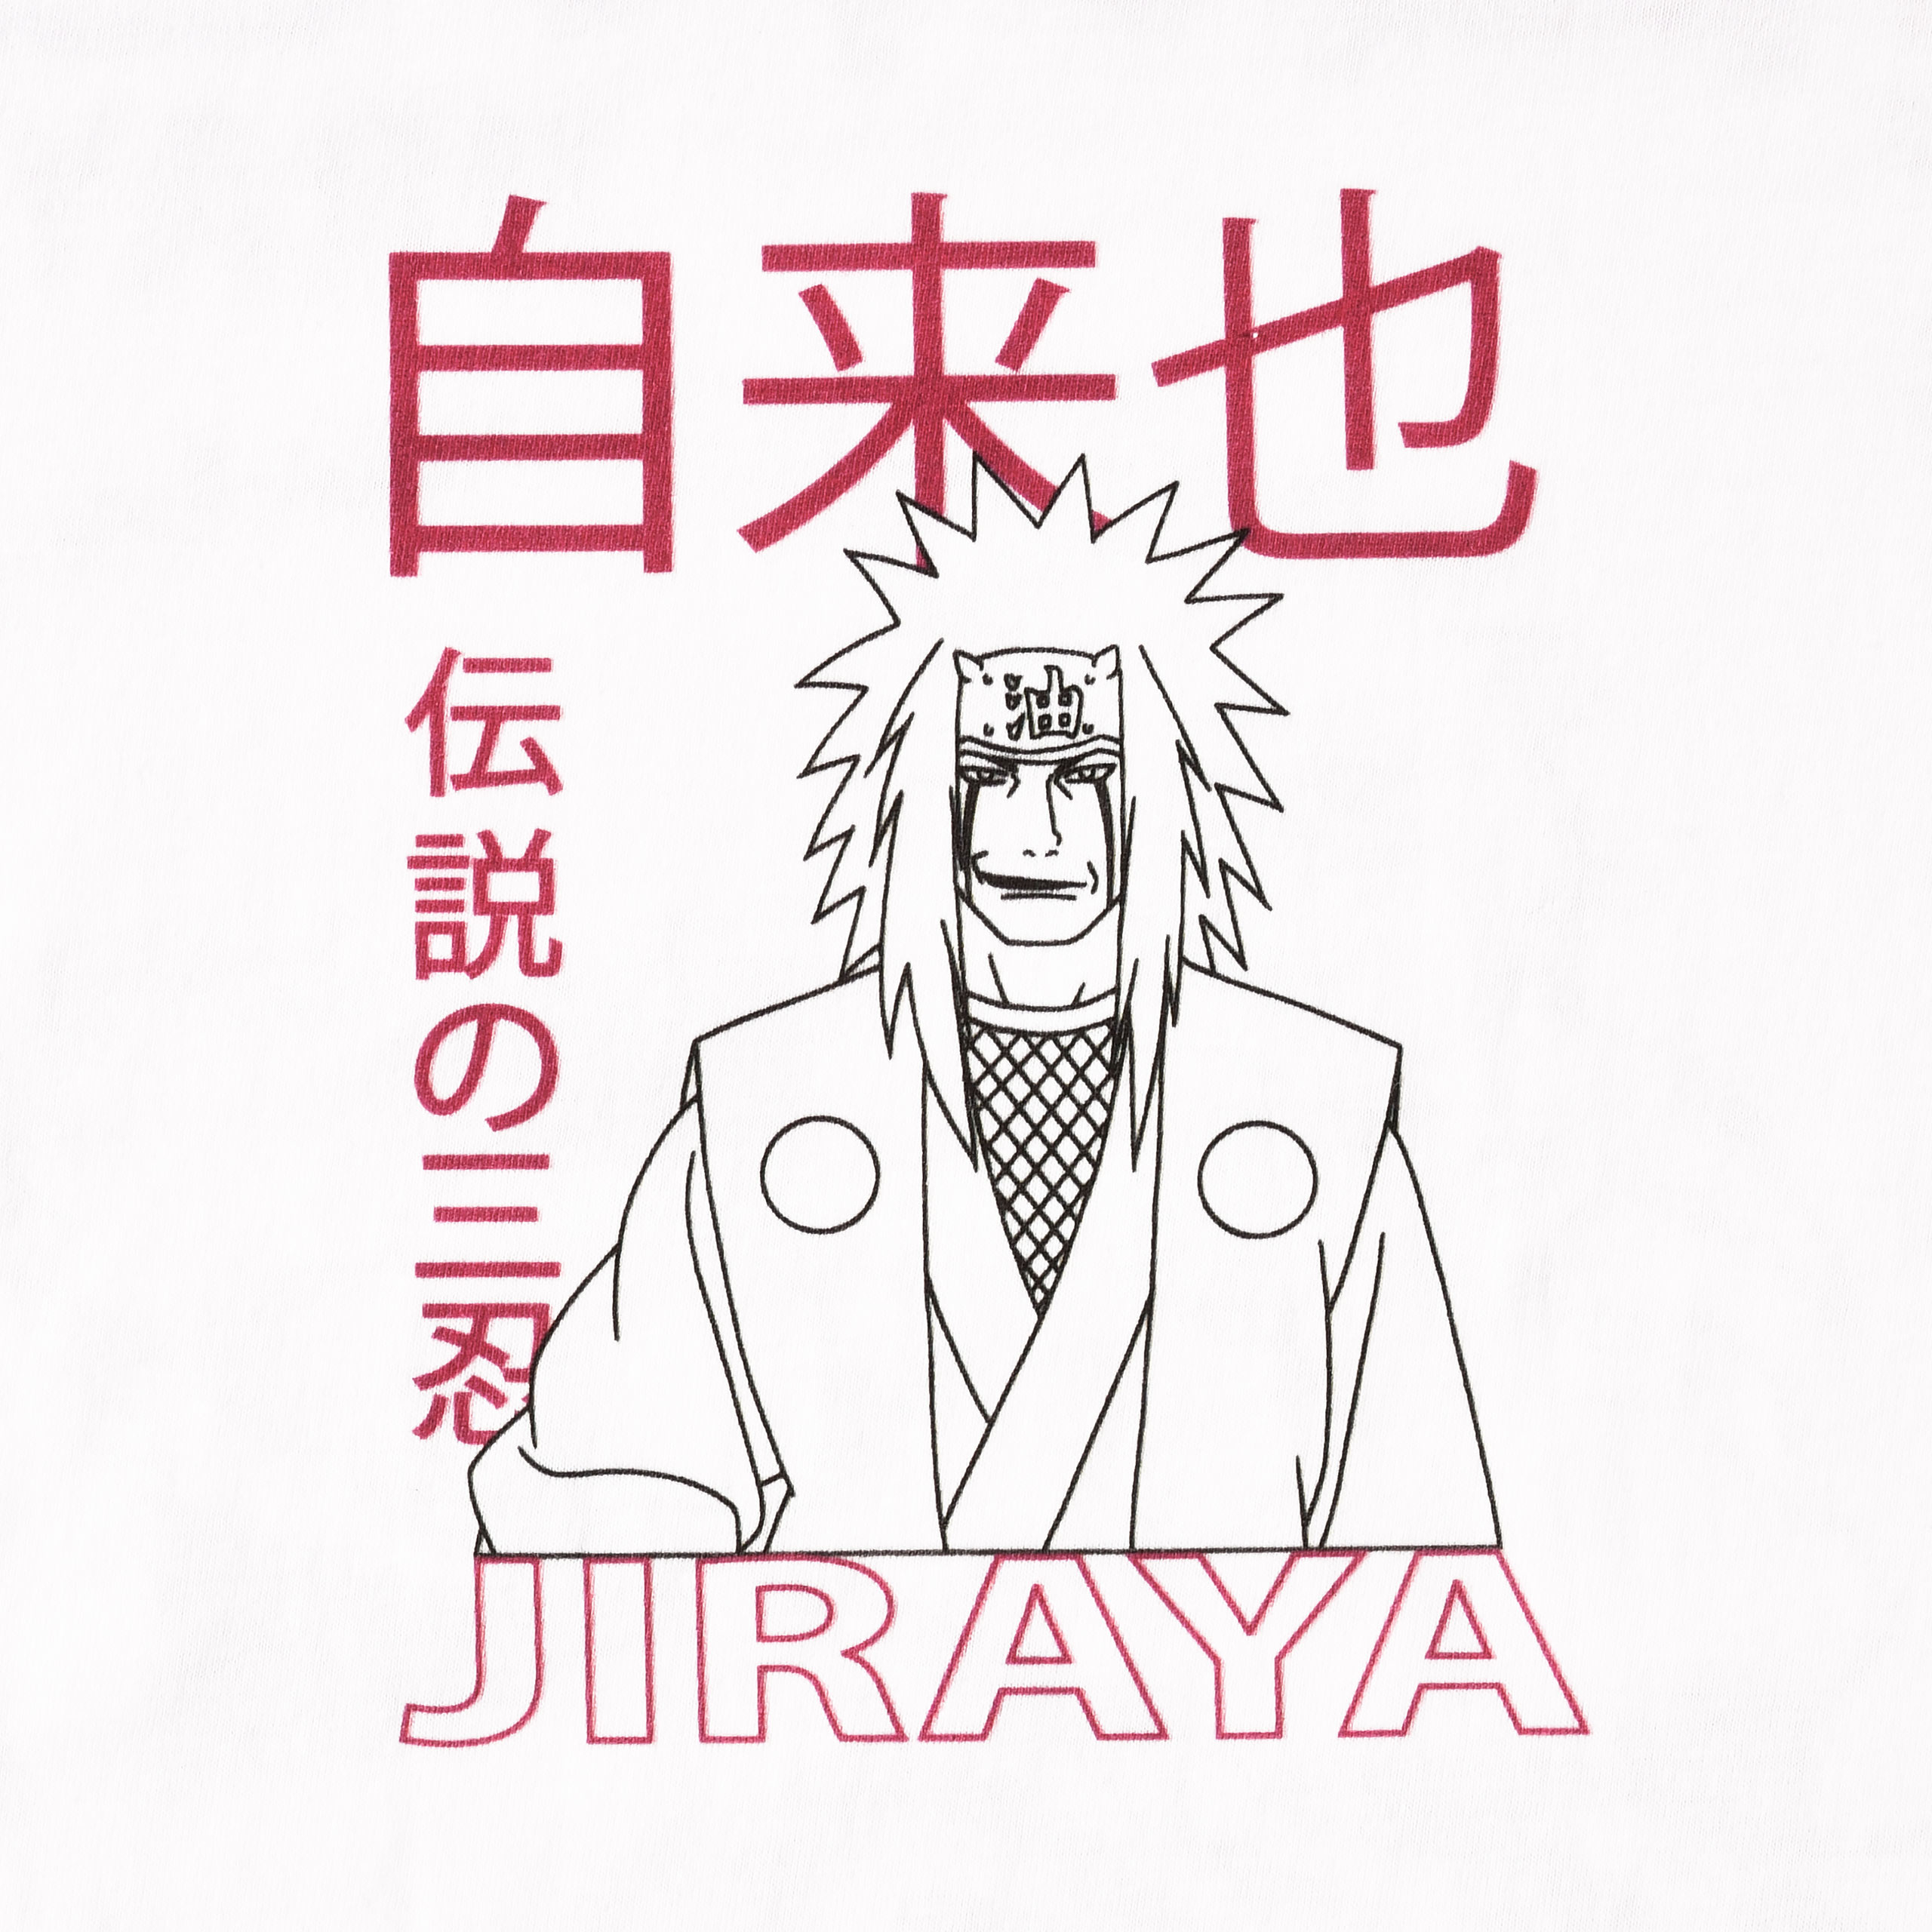 Naruto - Jiraya T-shirt white